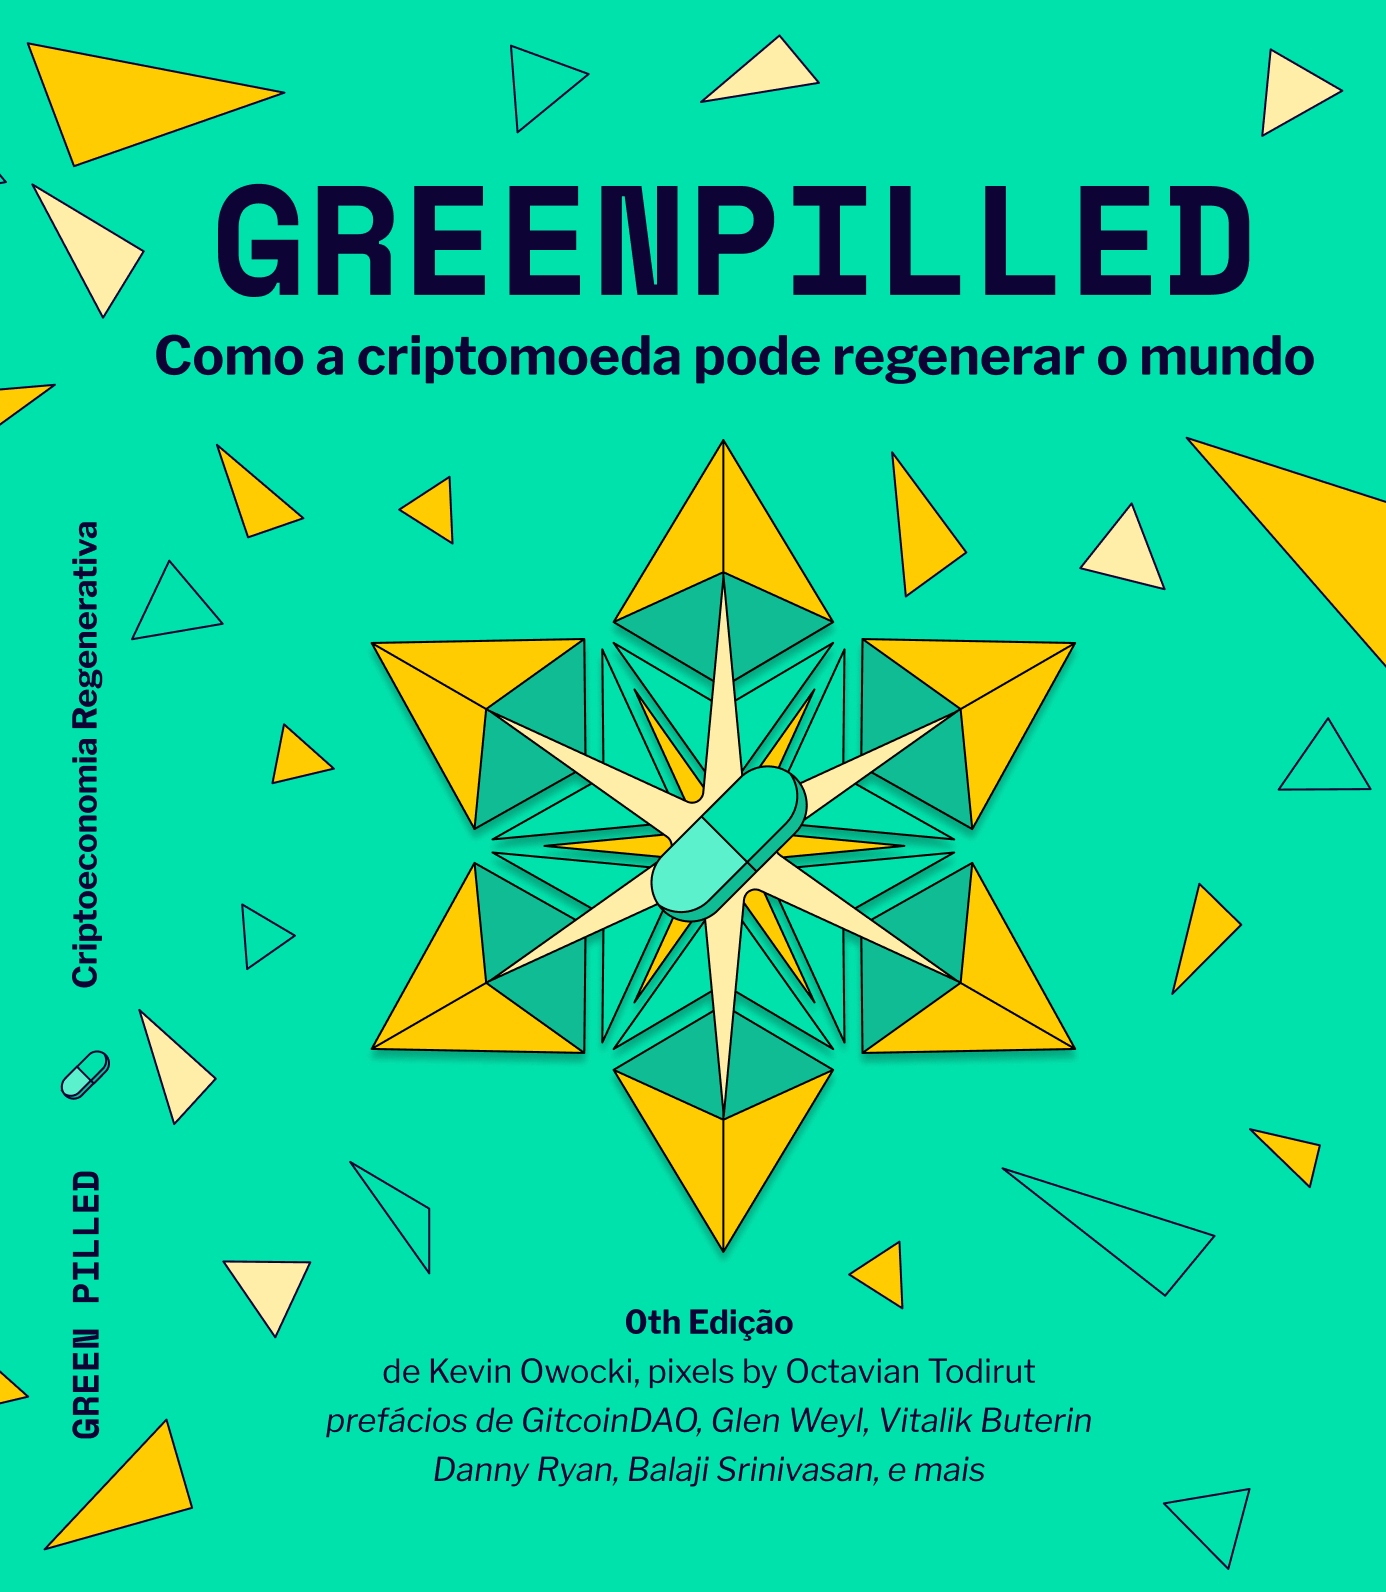 Green Pill Book (digital edition) [Portugese]